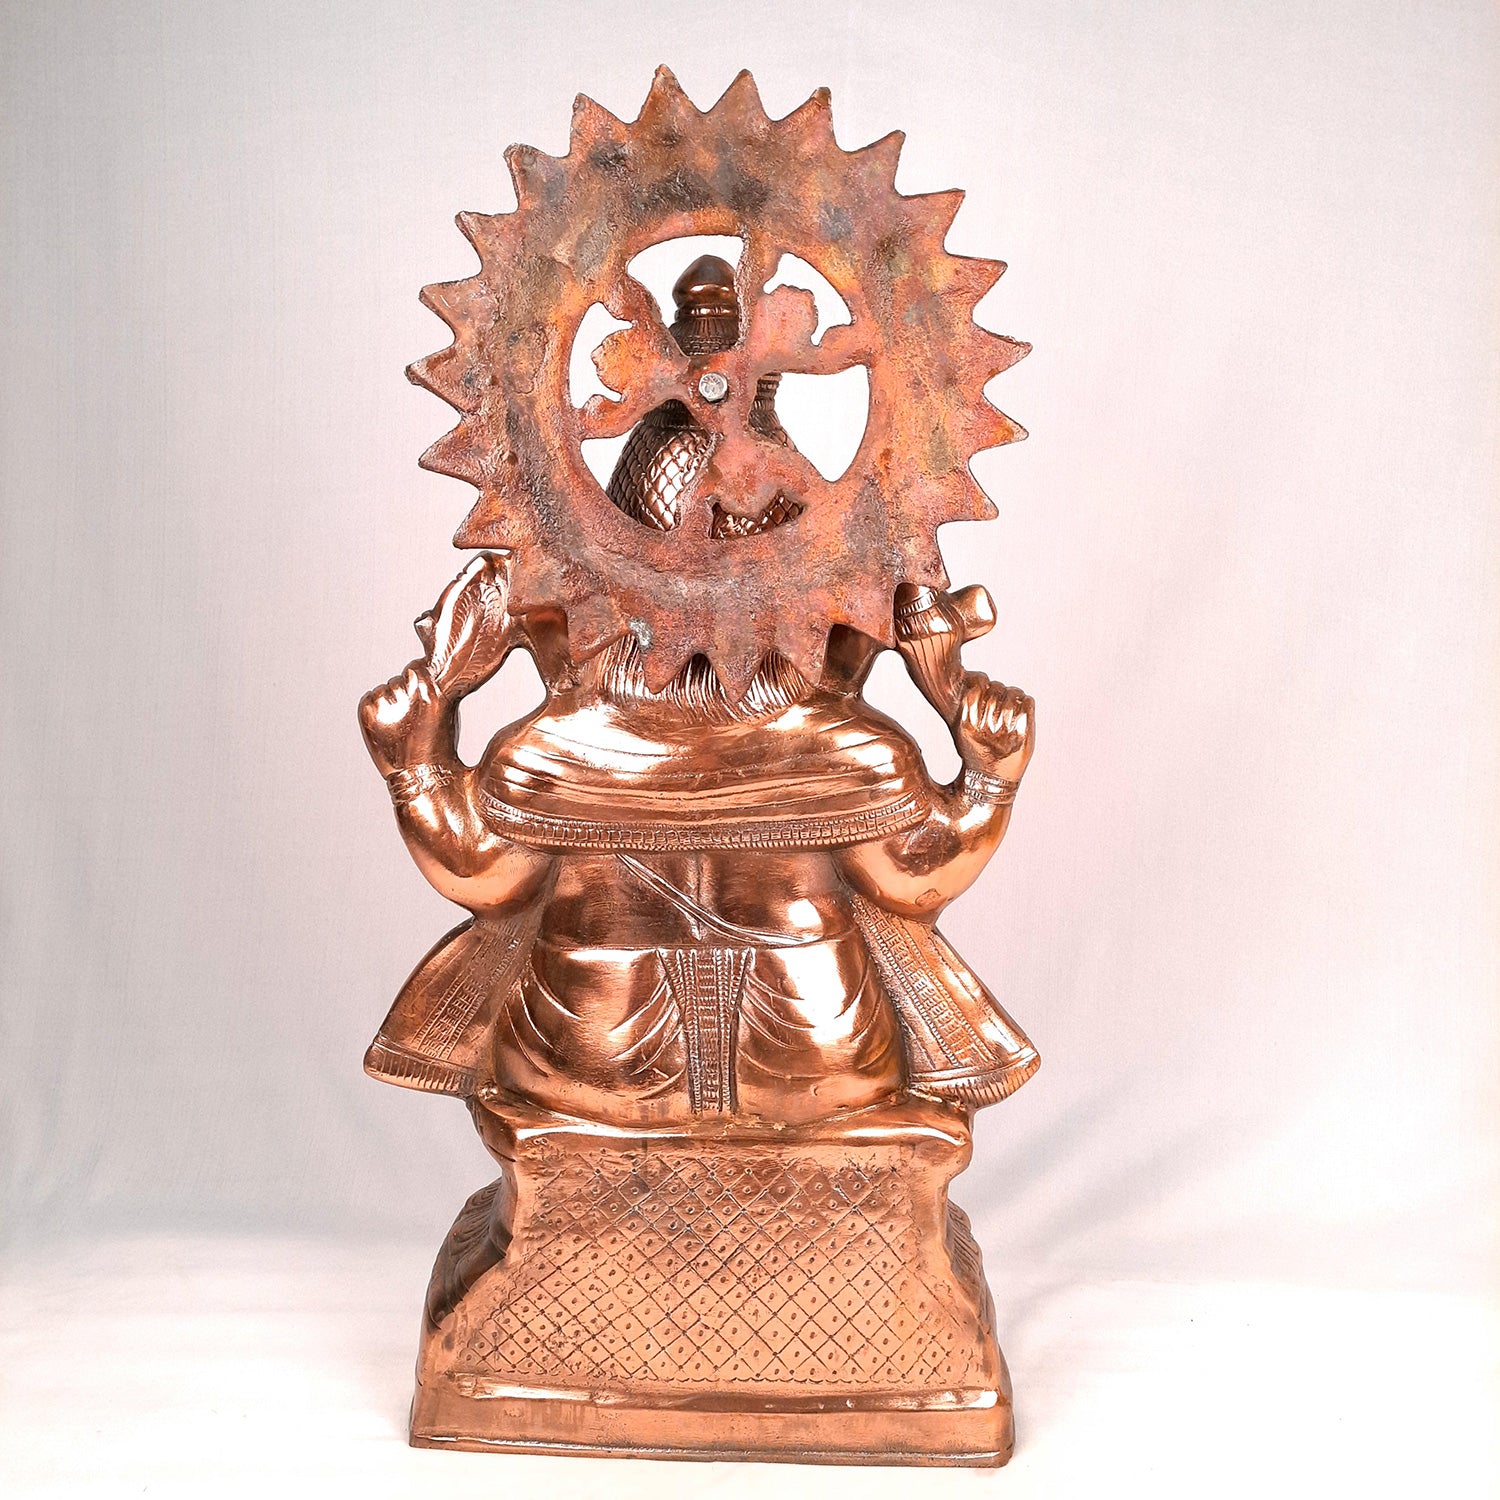 Ganesh Idol | Lord Ganesha Statue Murti |Religoius & Spiritual Art - For Puja, Home & Entrance Living Room Decor & Gift - 21 Inch - Apkamart